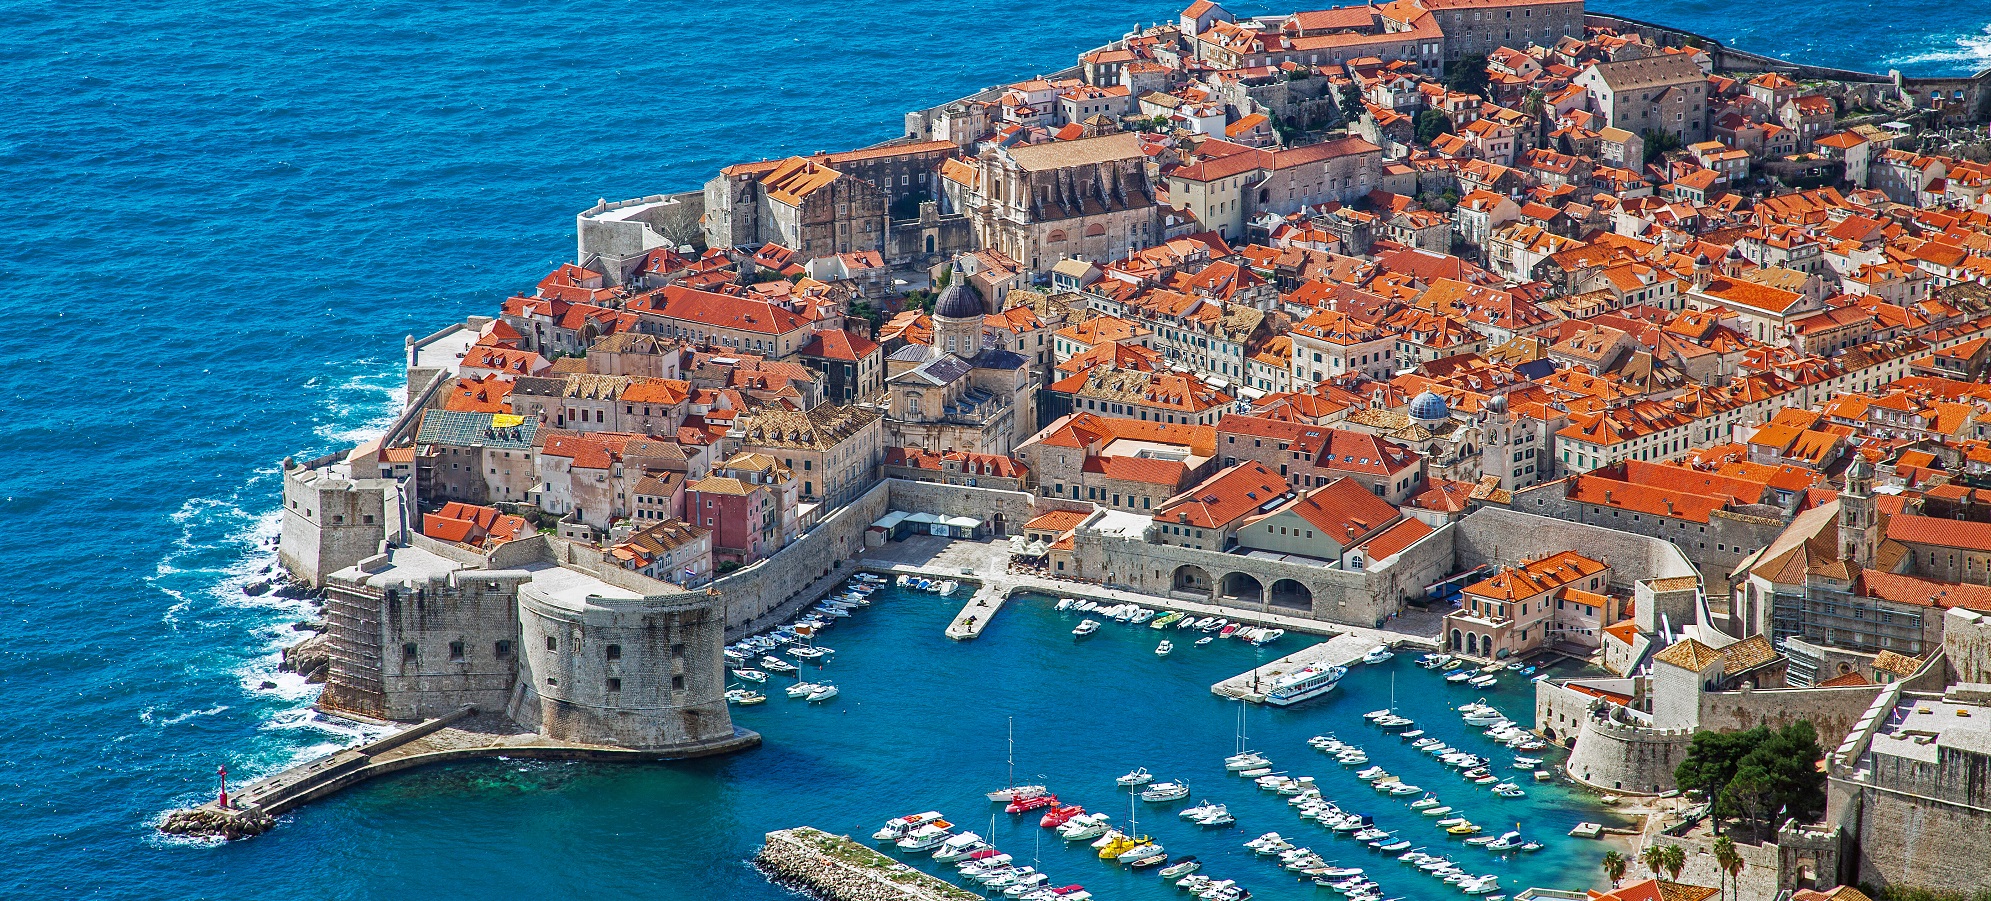 UNESCO World Heritage Sites in Dalmatia: From Zadar to Dubrovnik